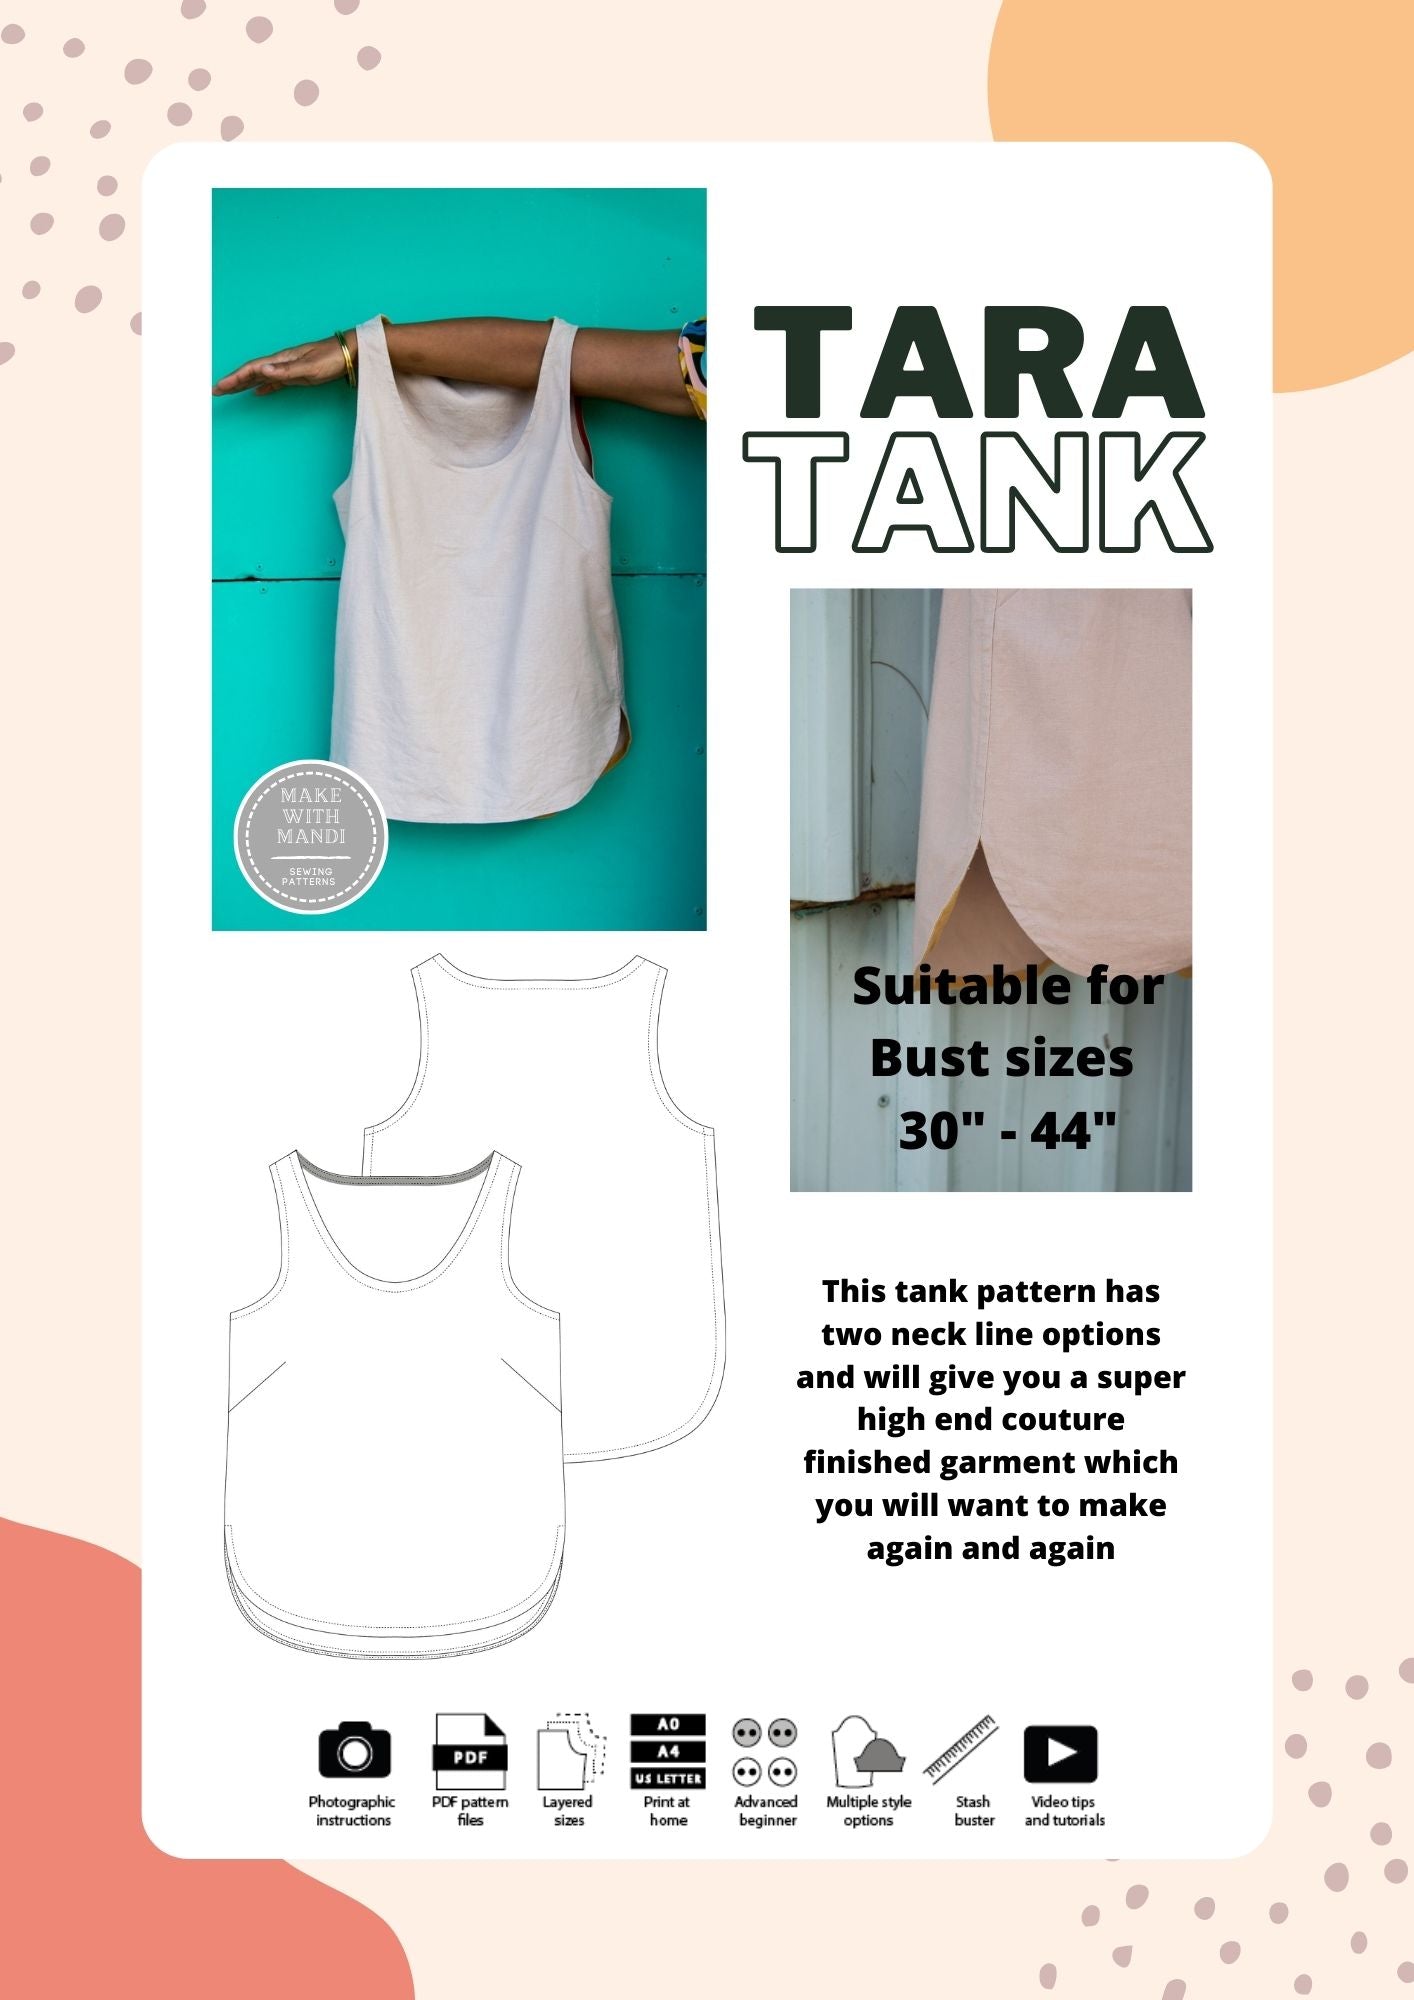 The Tara Tank